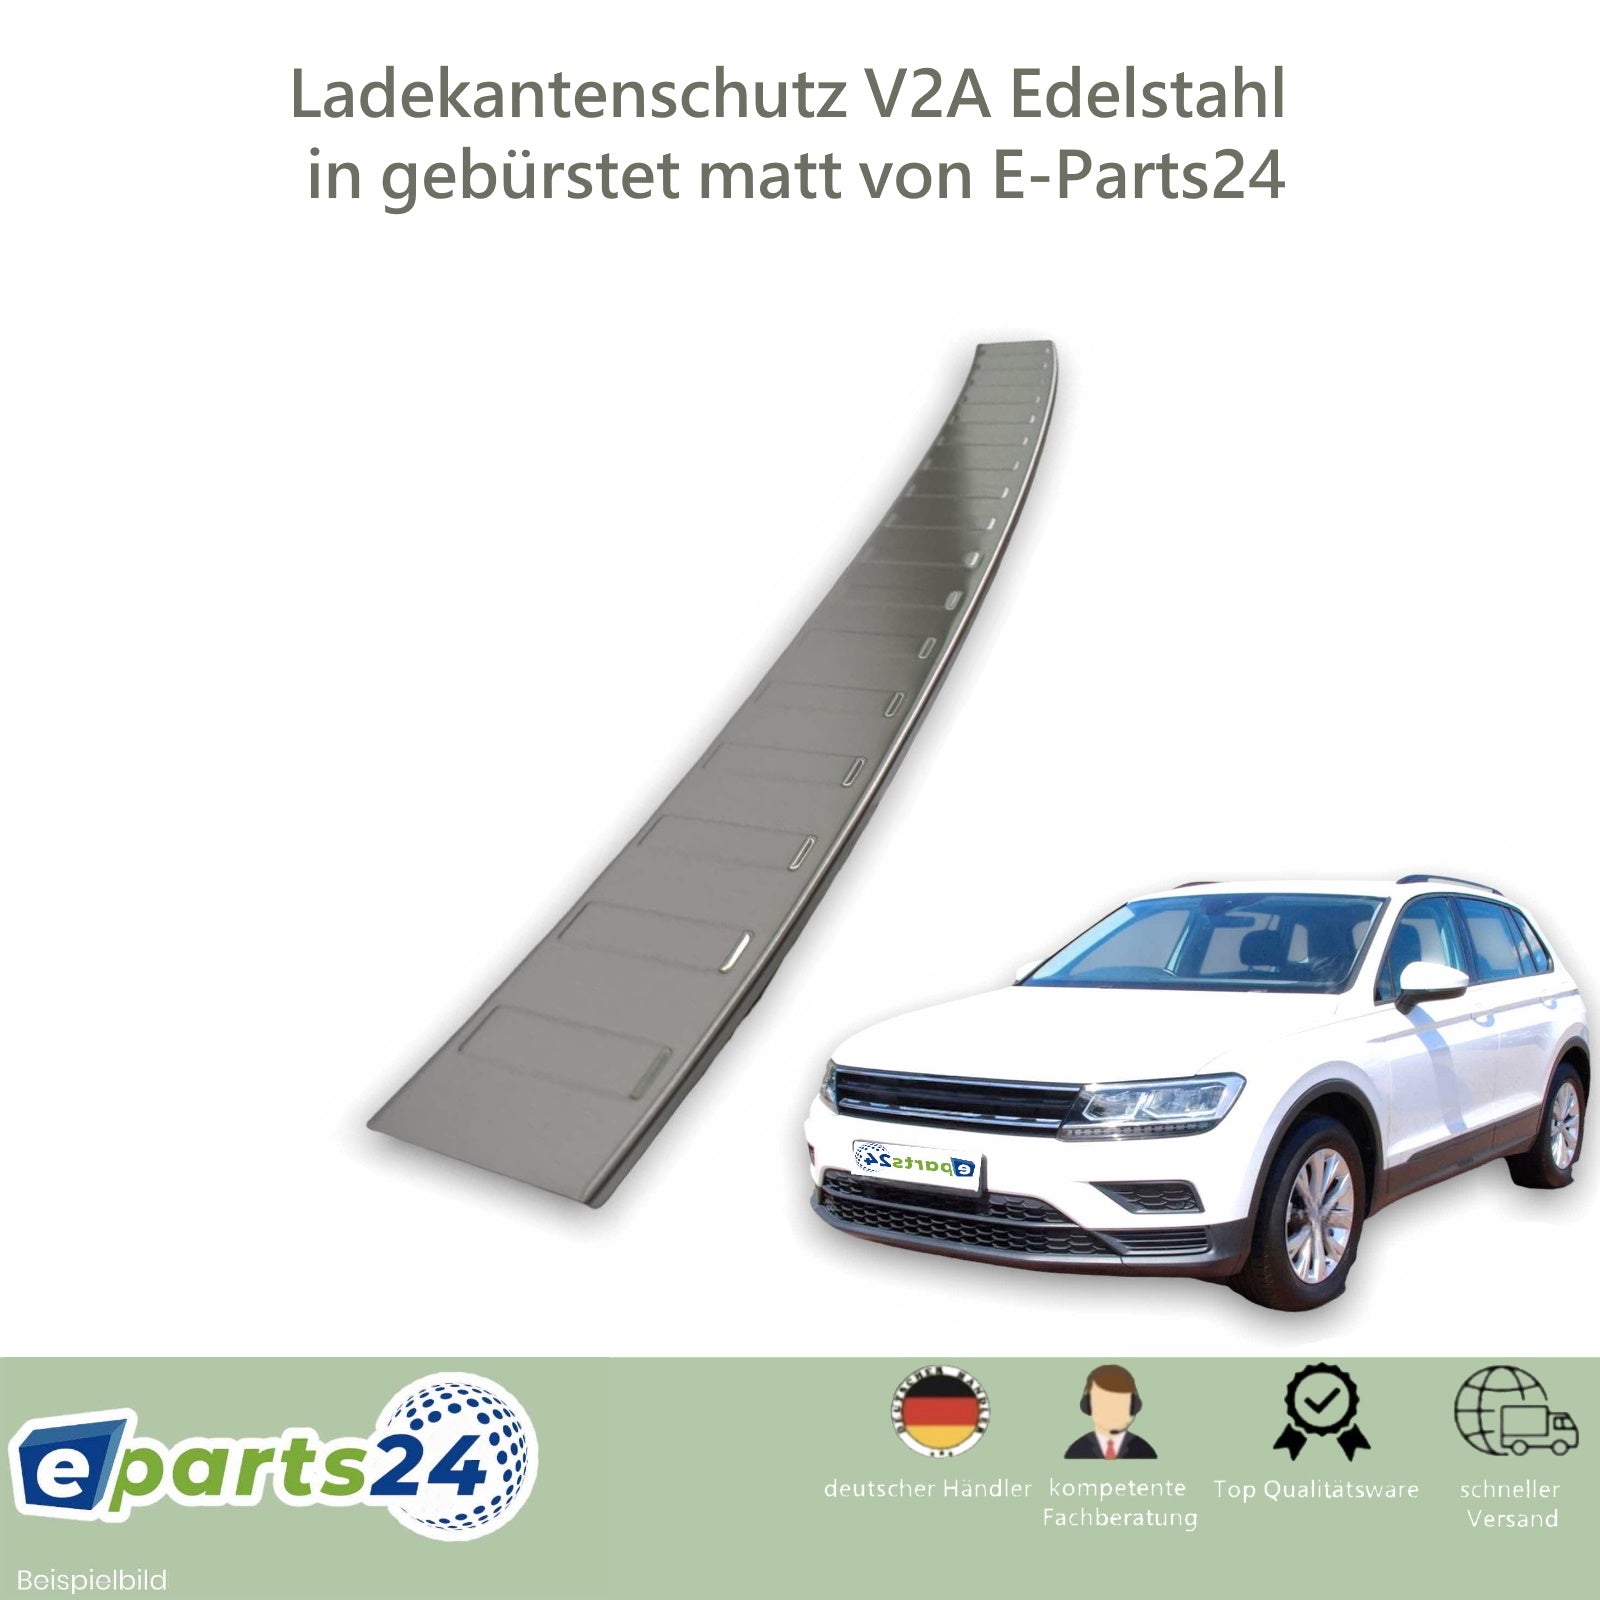 Ladekantenschutz für VW Tiguan 2 II ab Edelstahl 2016- ALLSPACE E-Parts24 – Tiguan